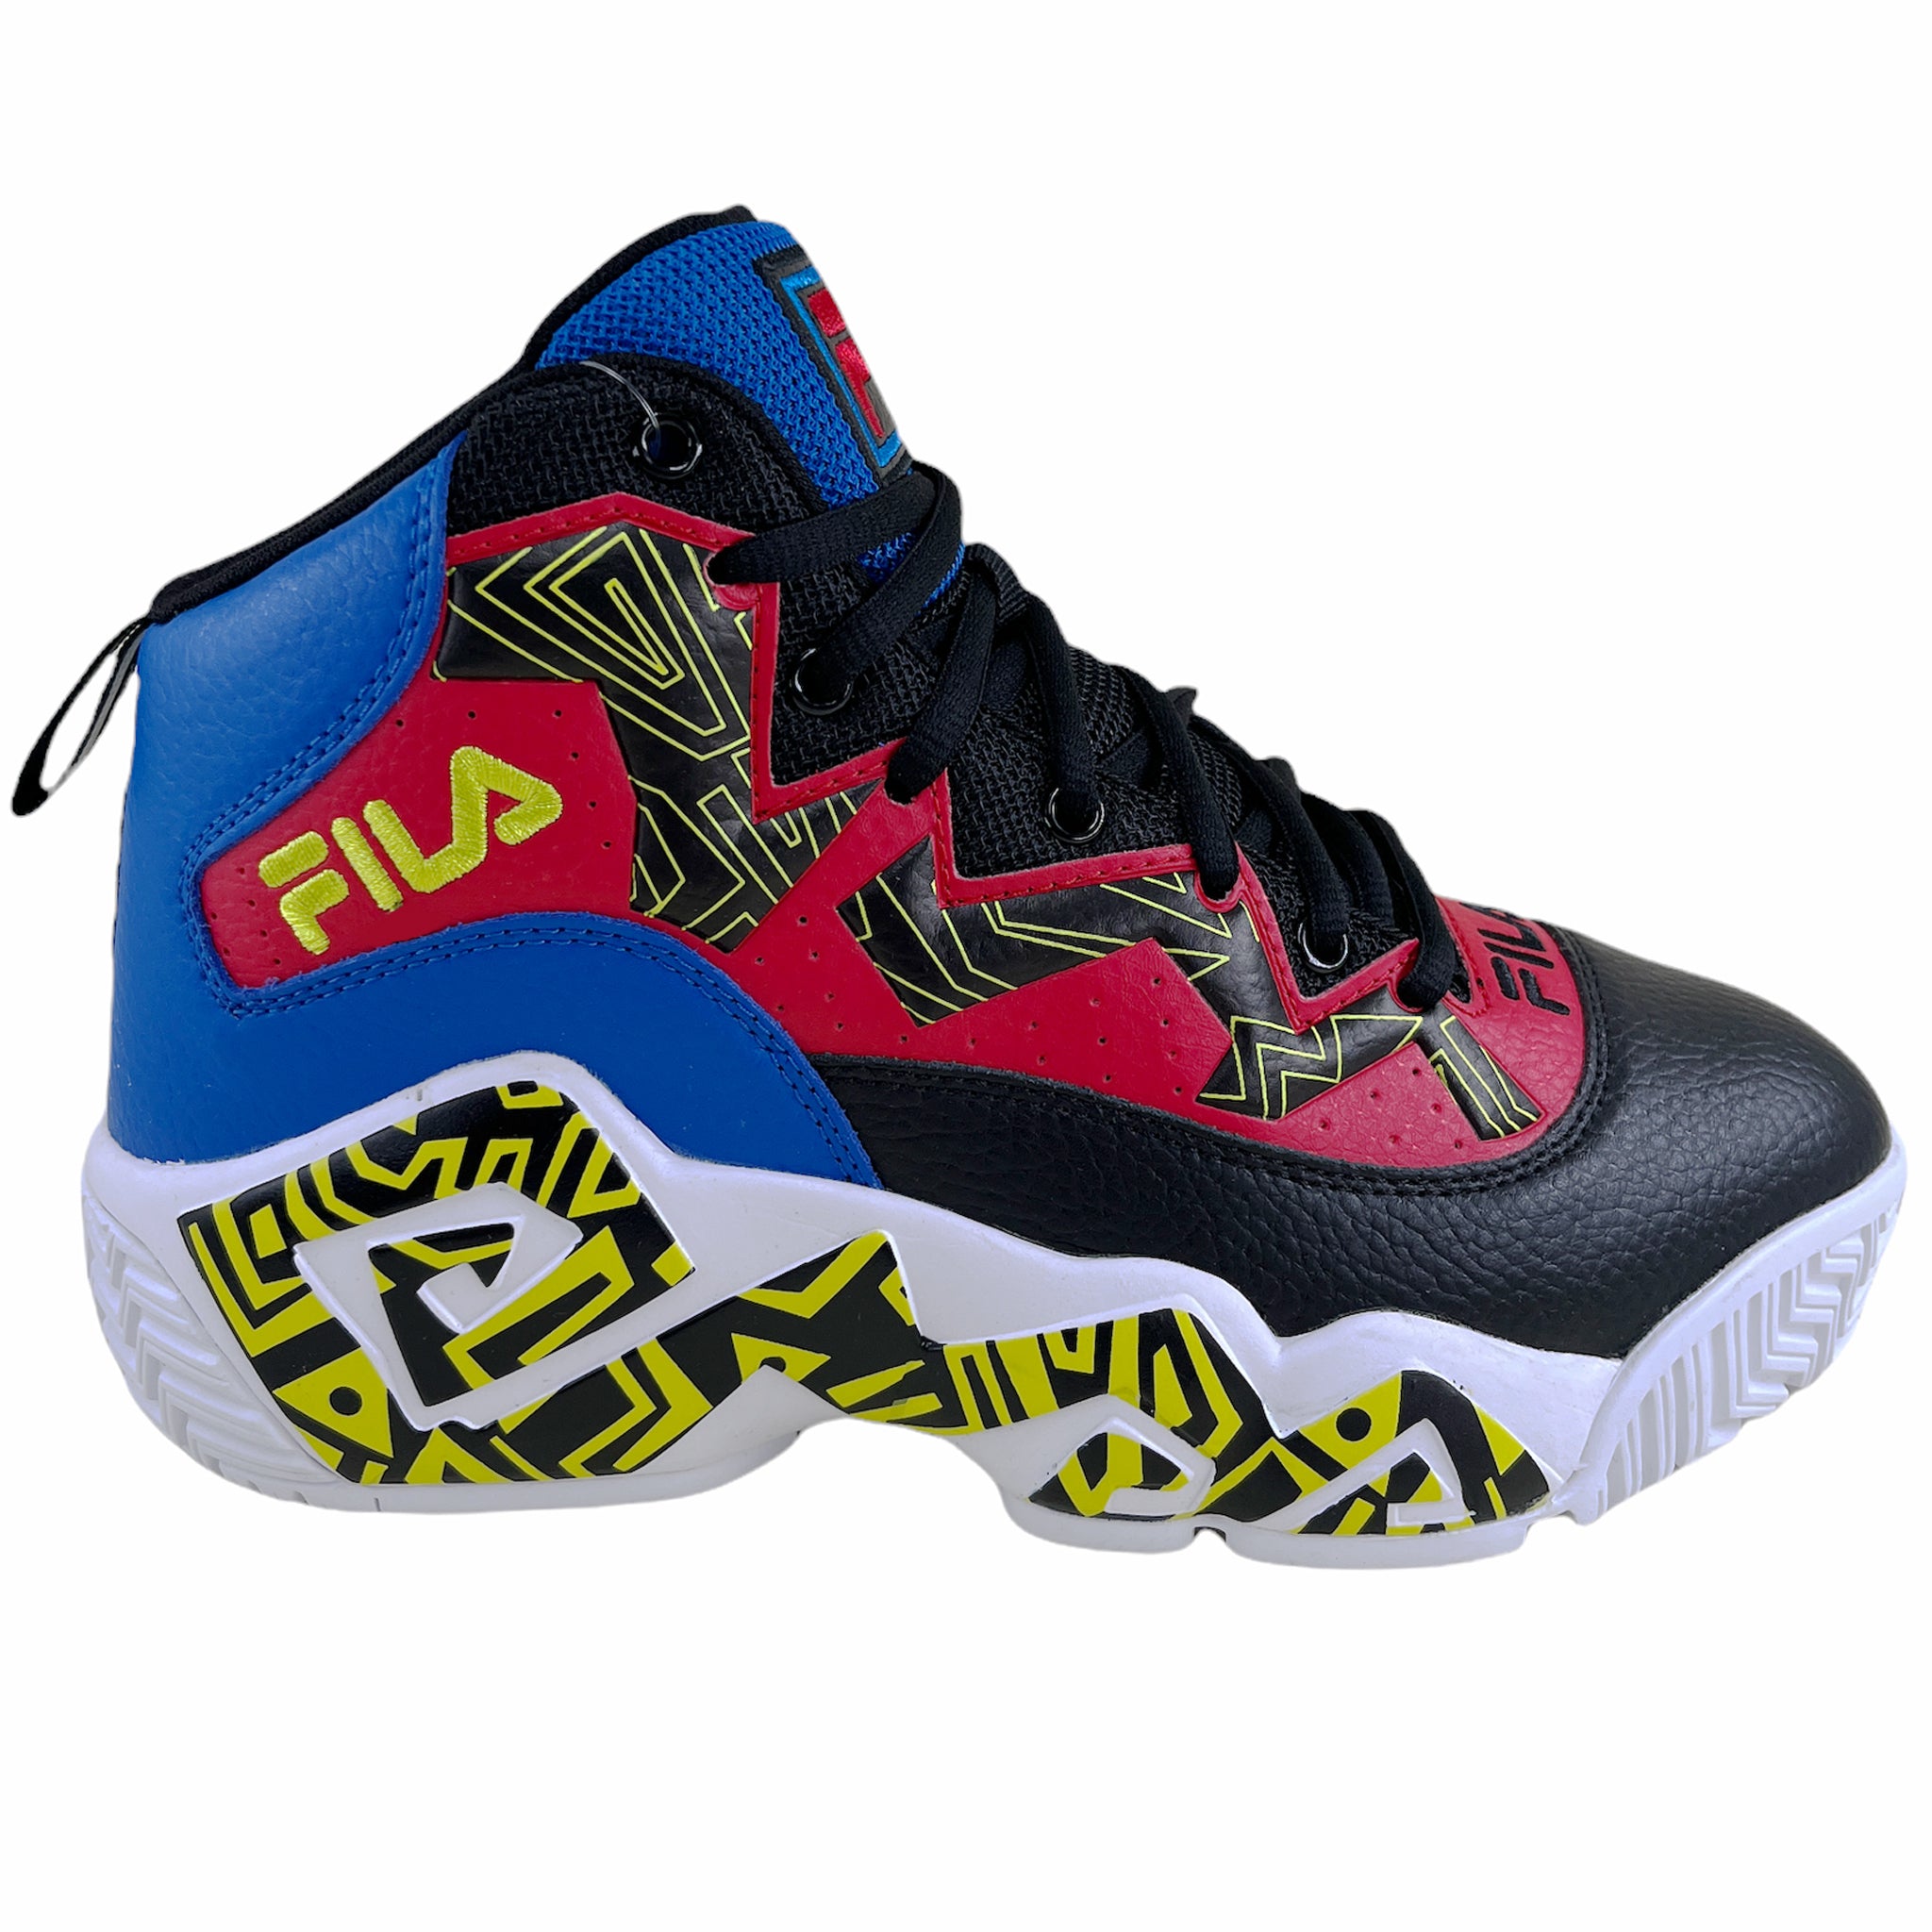 Fila Men's MB Mashburn Basketball Shoes 1BM01742-027 That Shoe Store and More